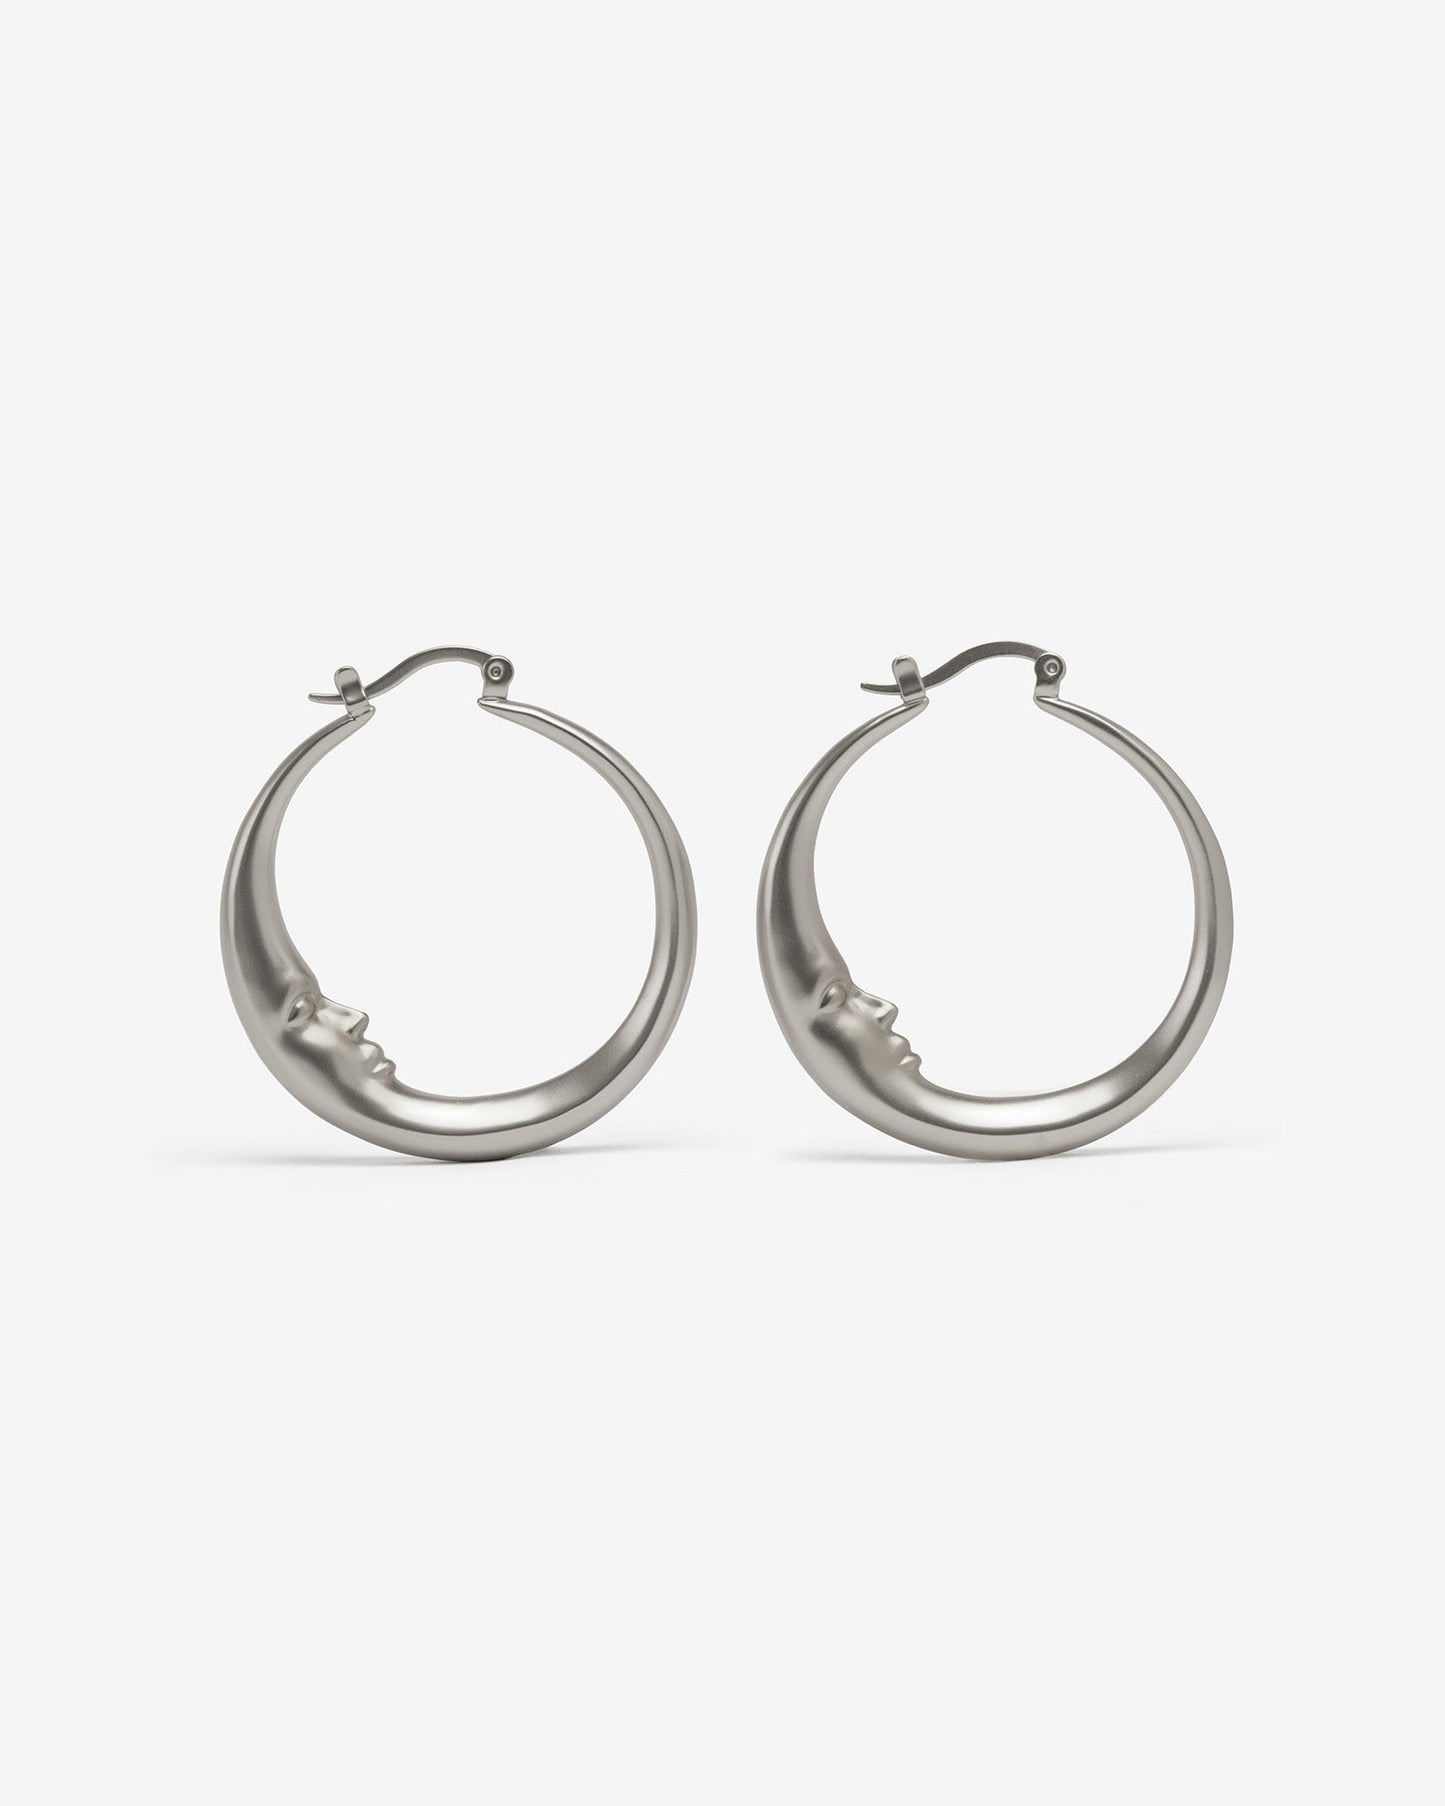 Lune Moon Earrings (Large) - Earrings - Ask and Embla